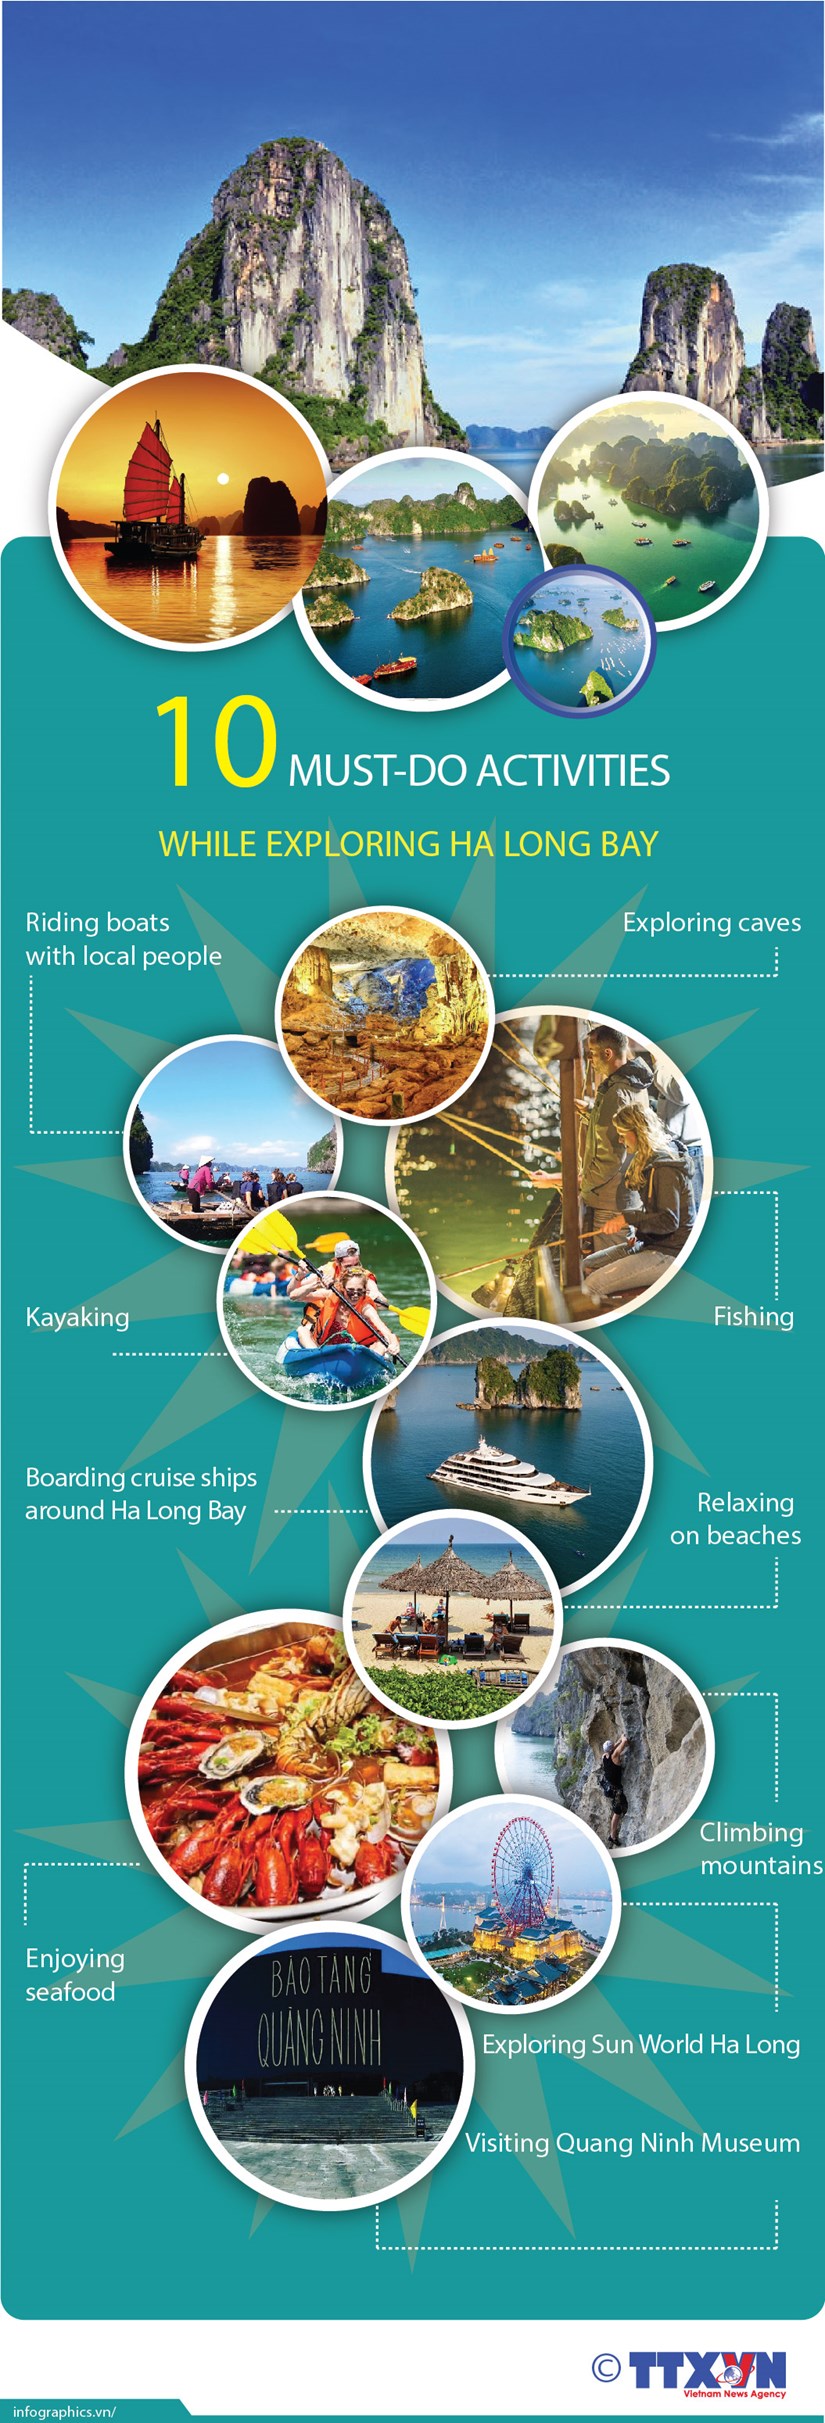 10 must-do activities while exploring Ha Long Bay hinh anh 1